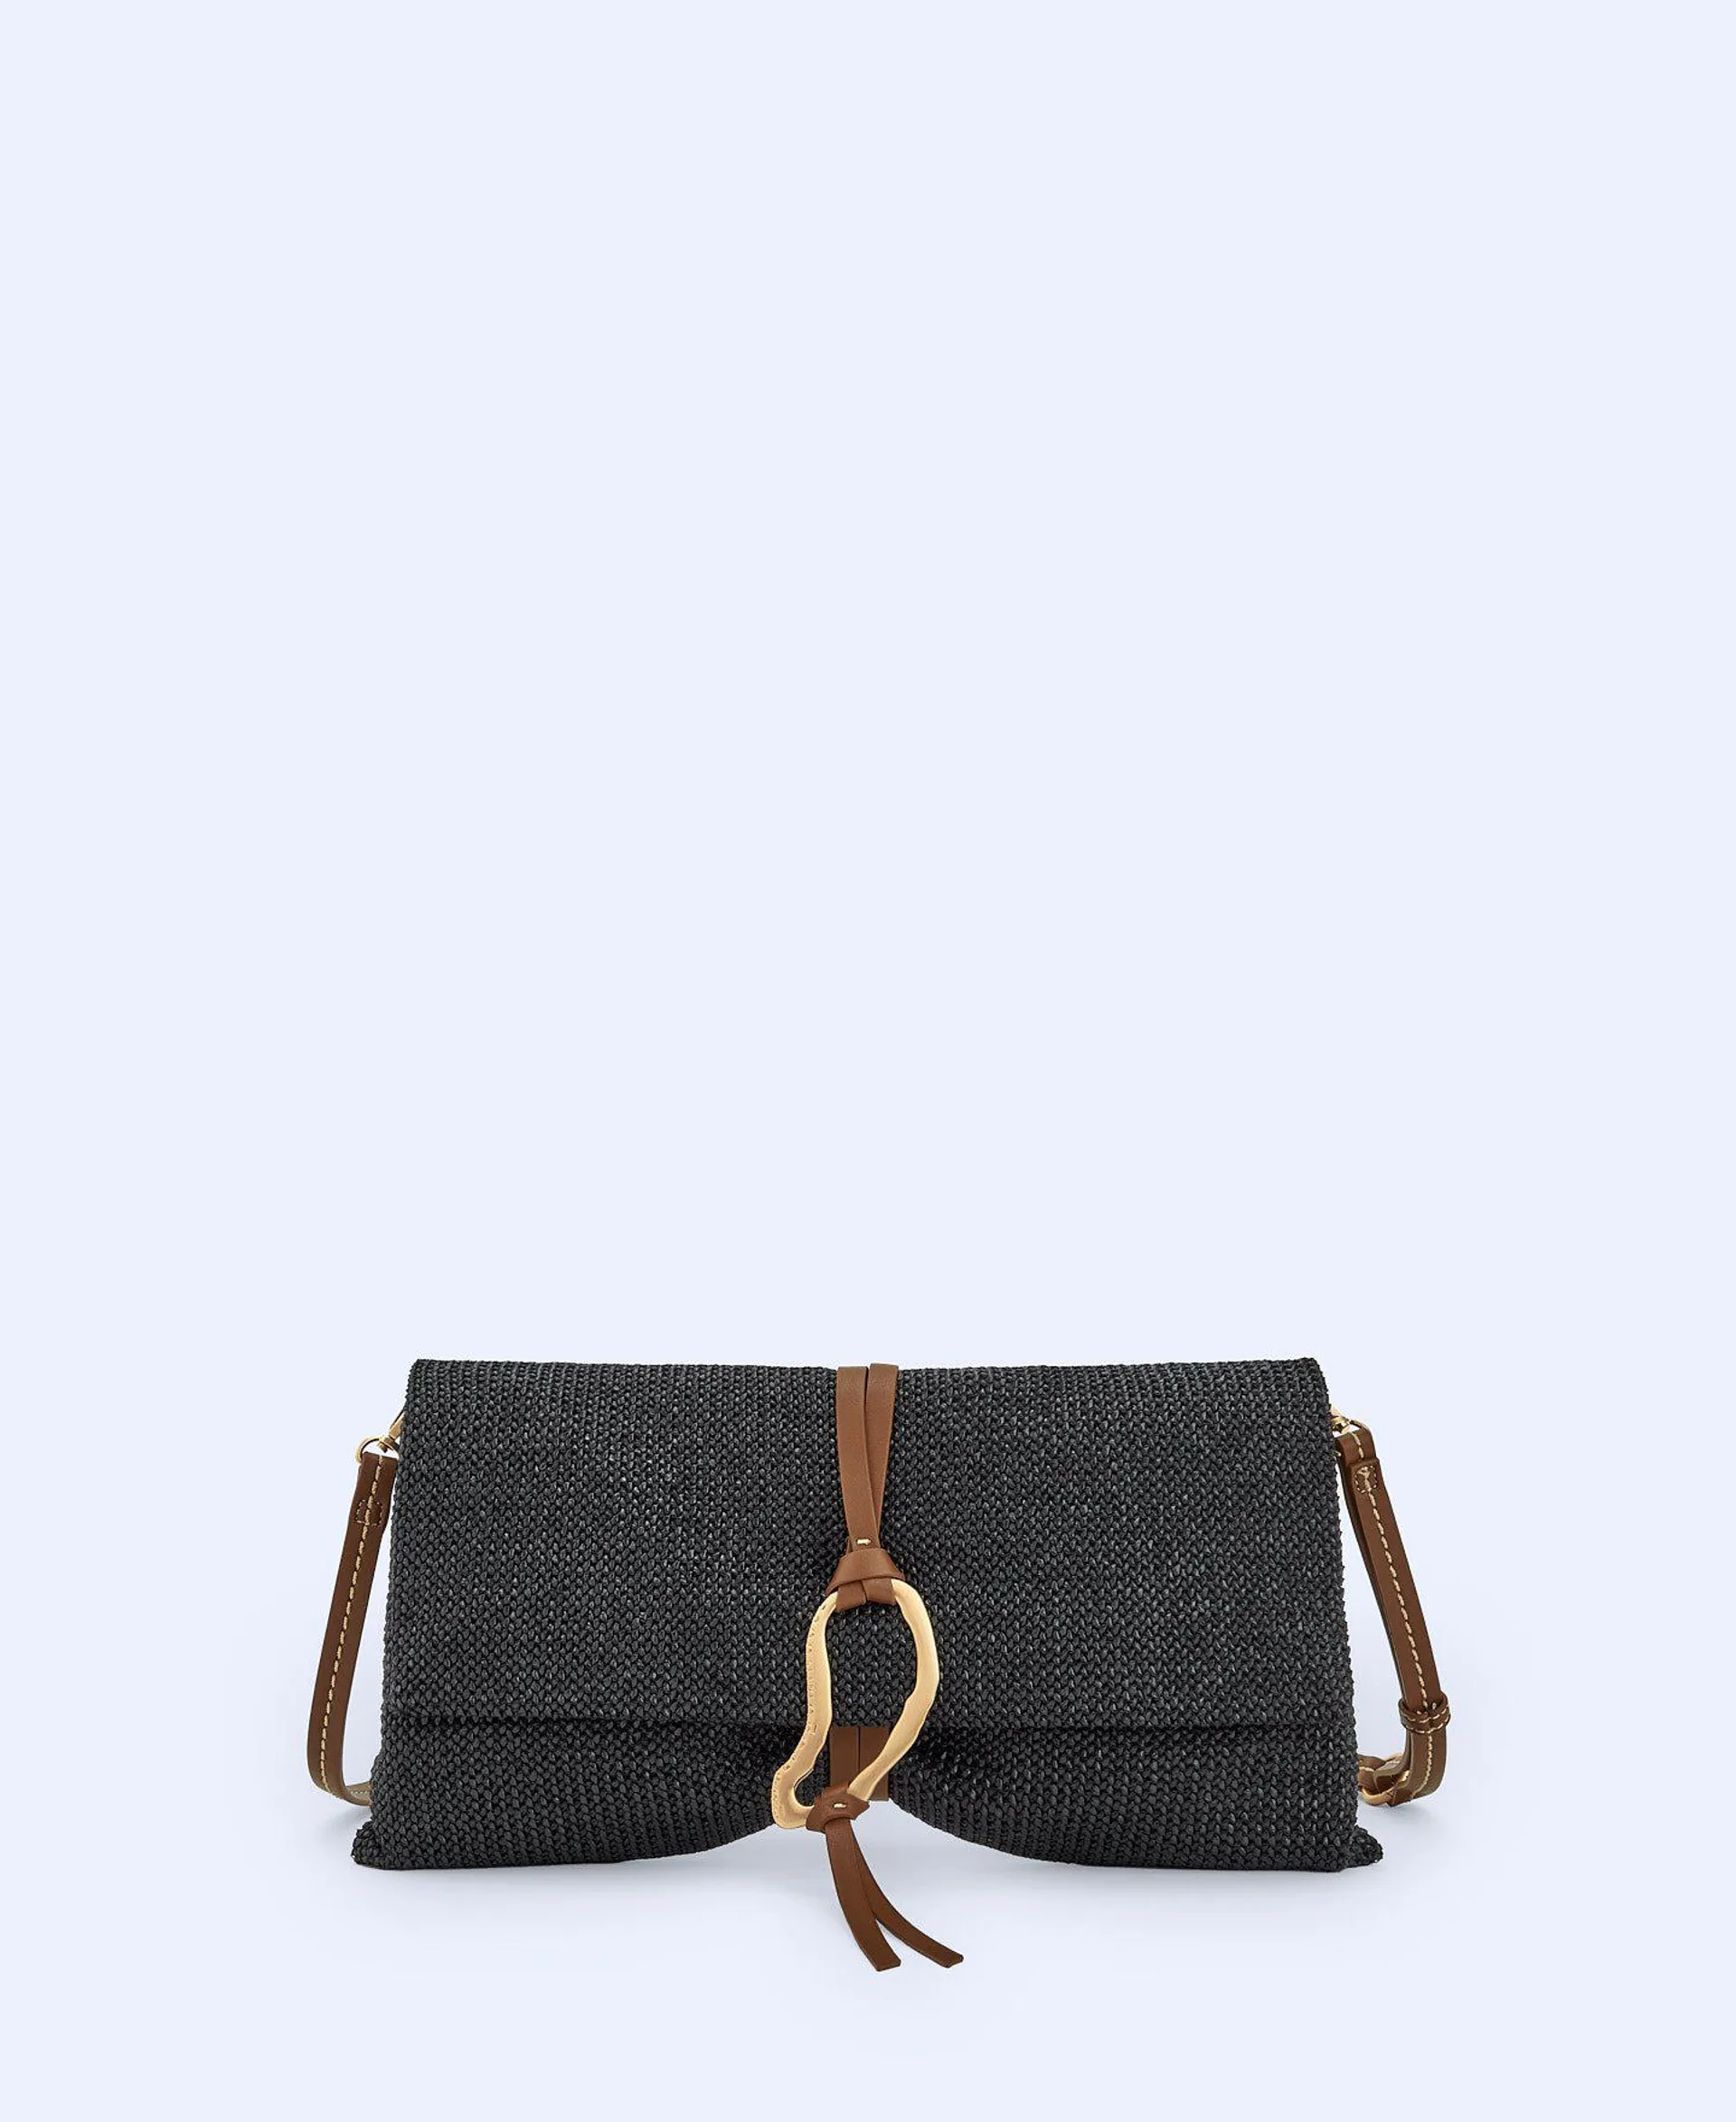 Braided fabric handbag